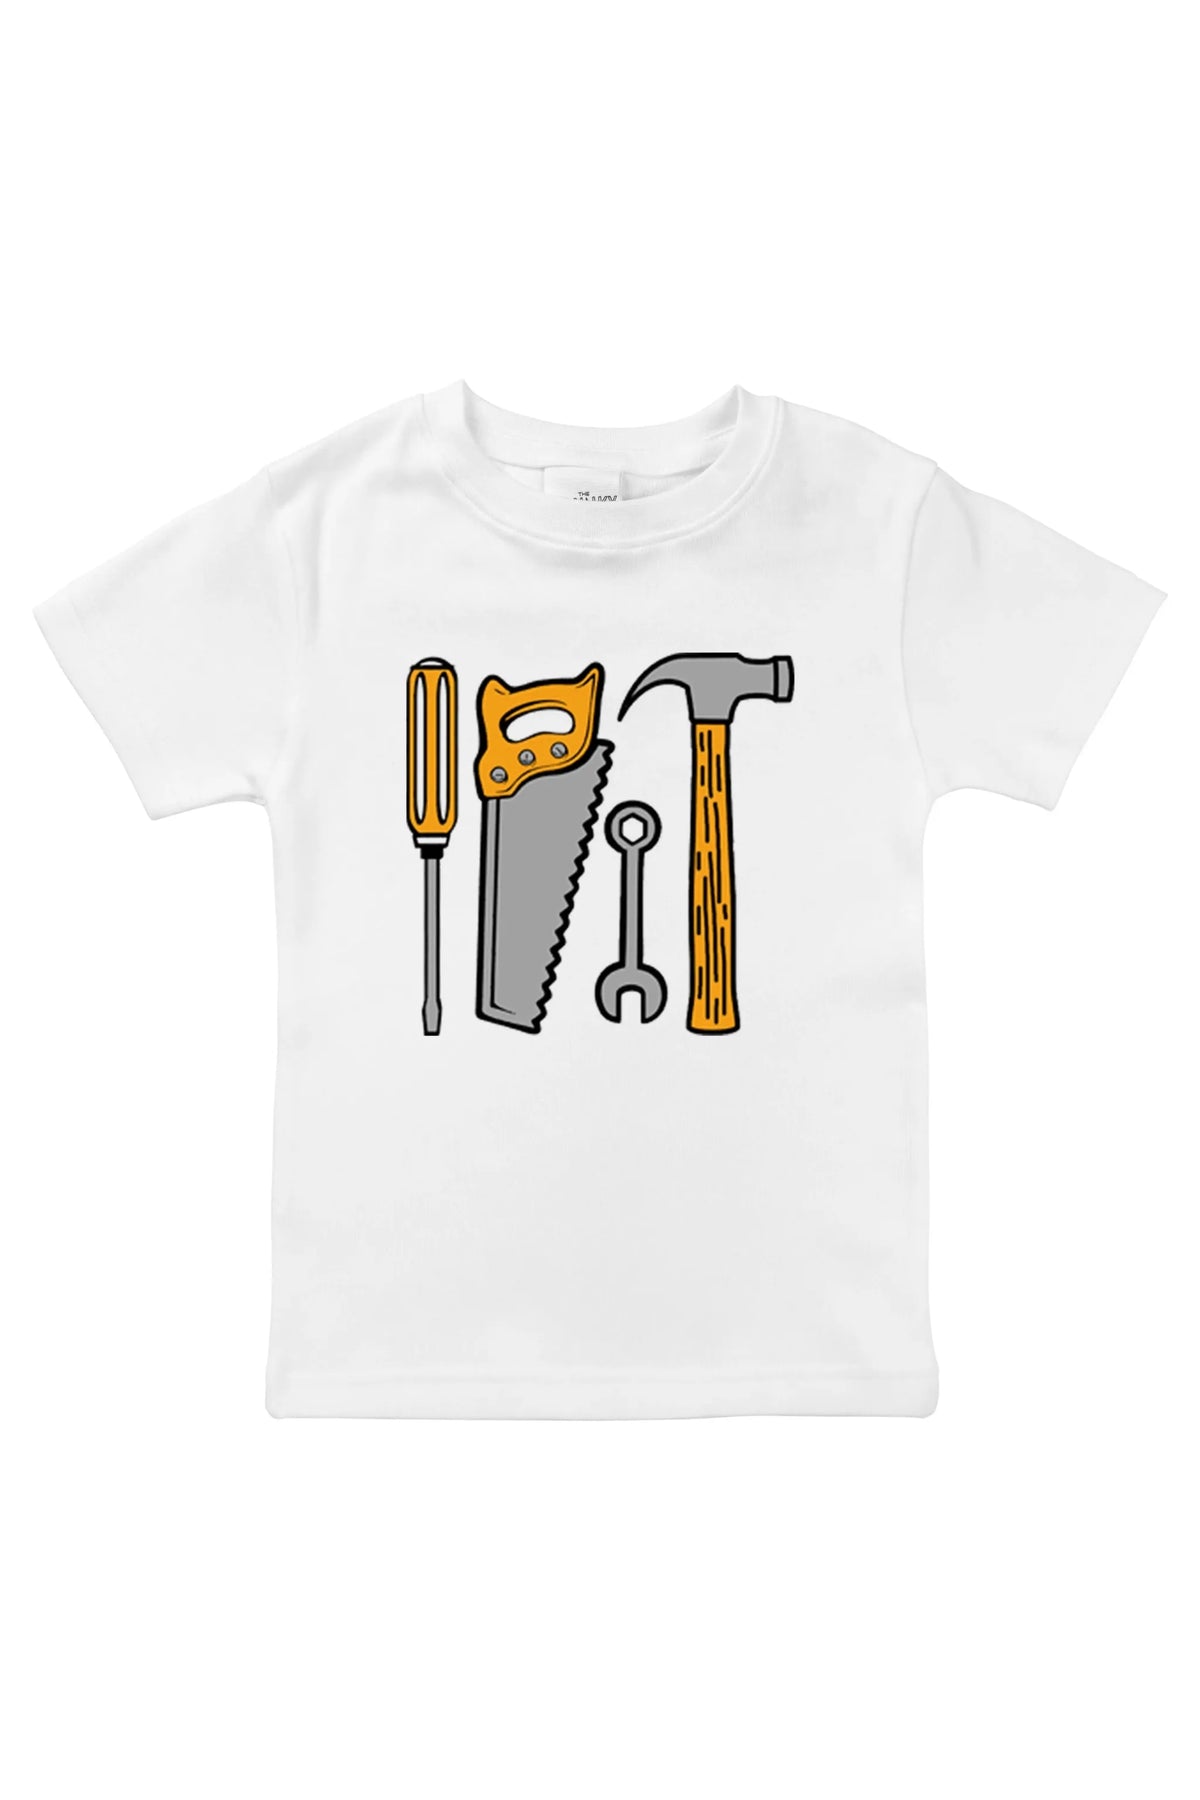 Tools of the Trade Organic Boy's T-shirt - Doodlebug Kidz